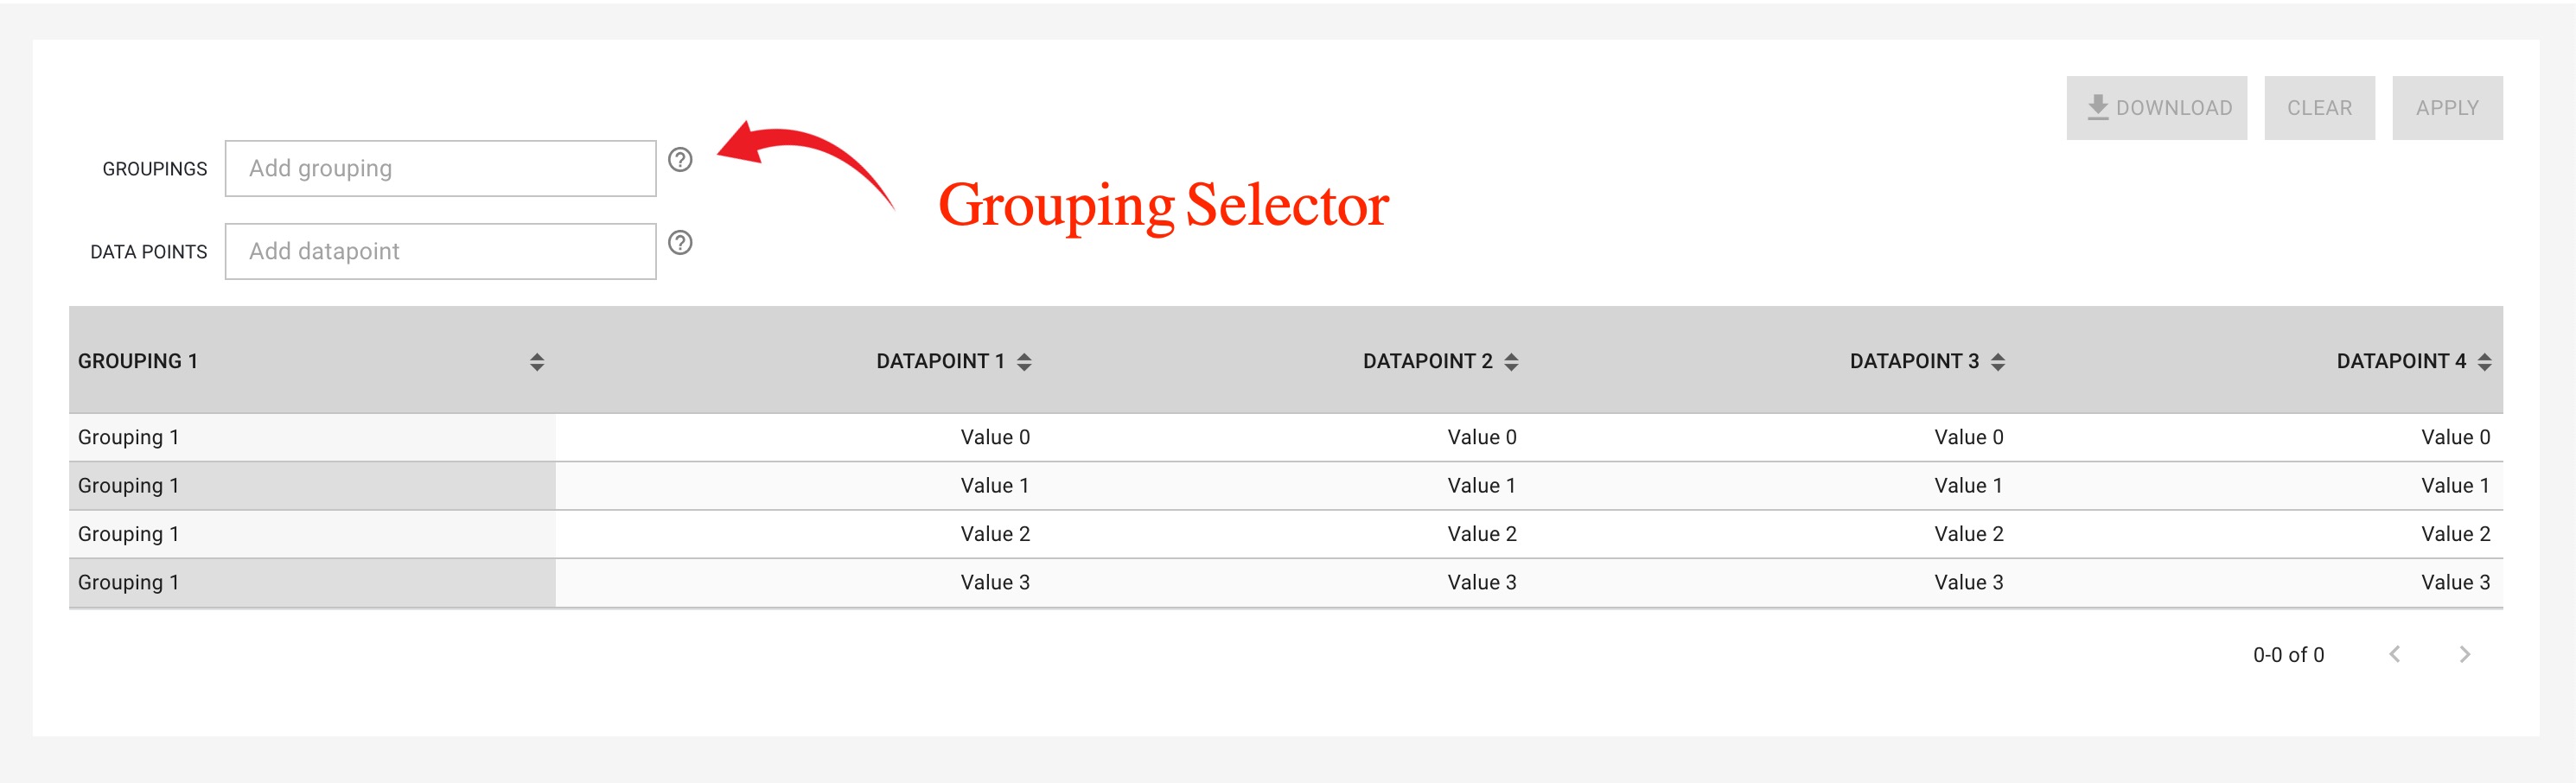 Grouping Selector